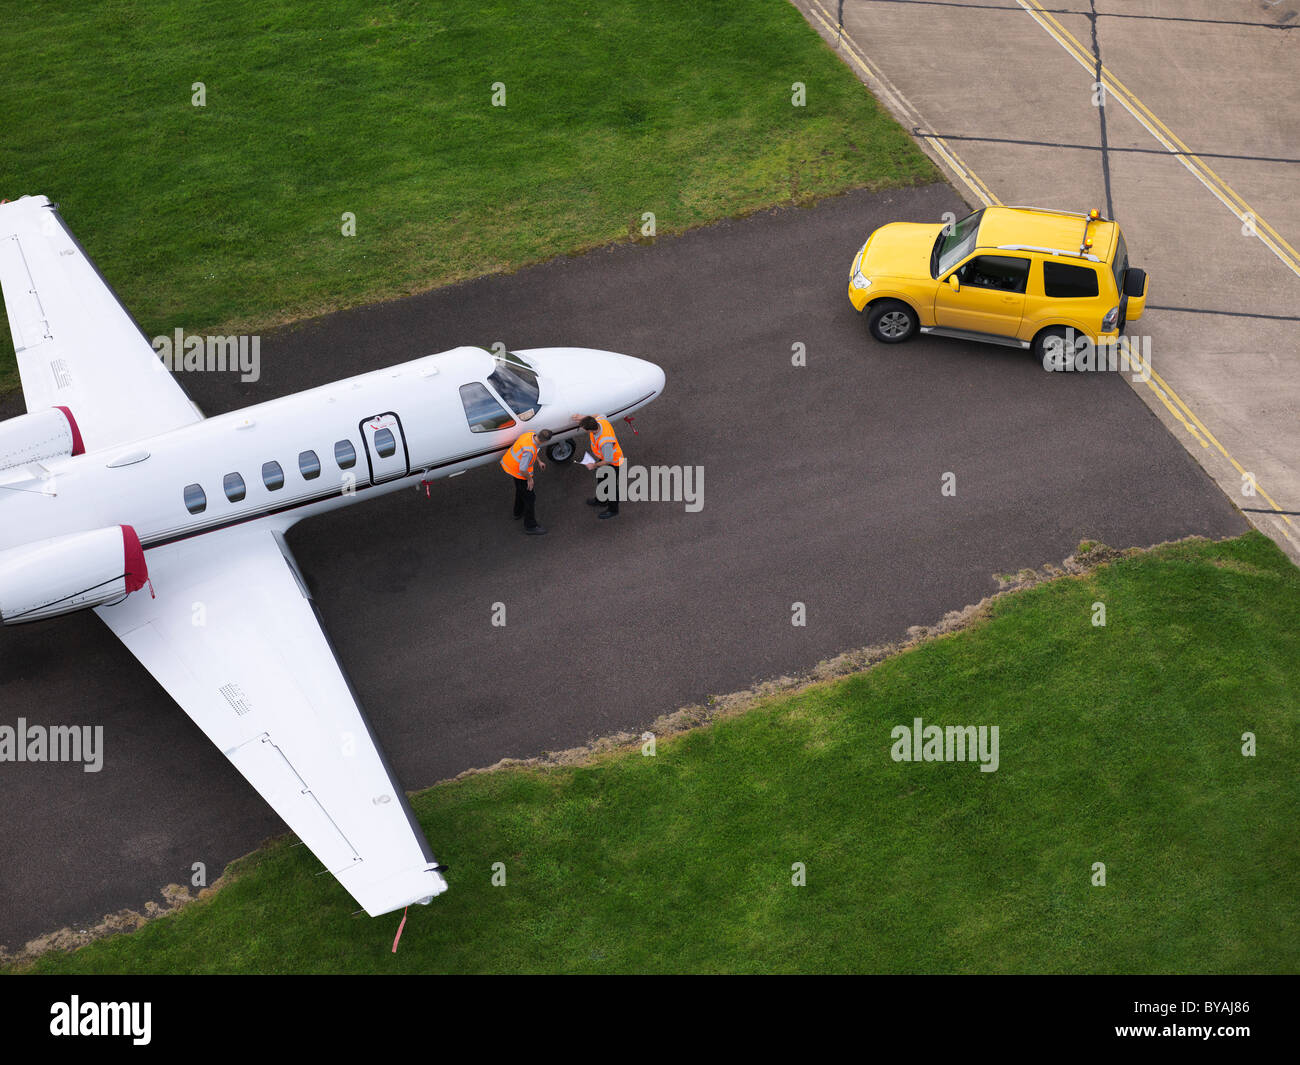 Engineers inspect jet on runway Stock Photo